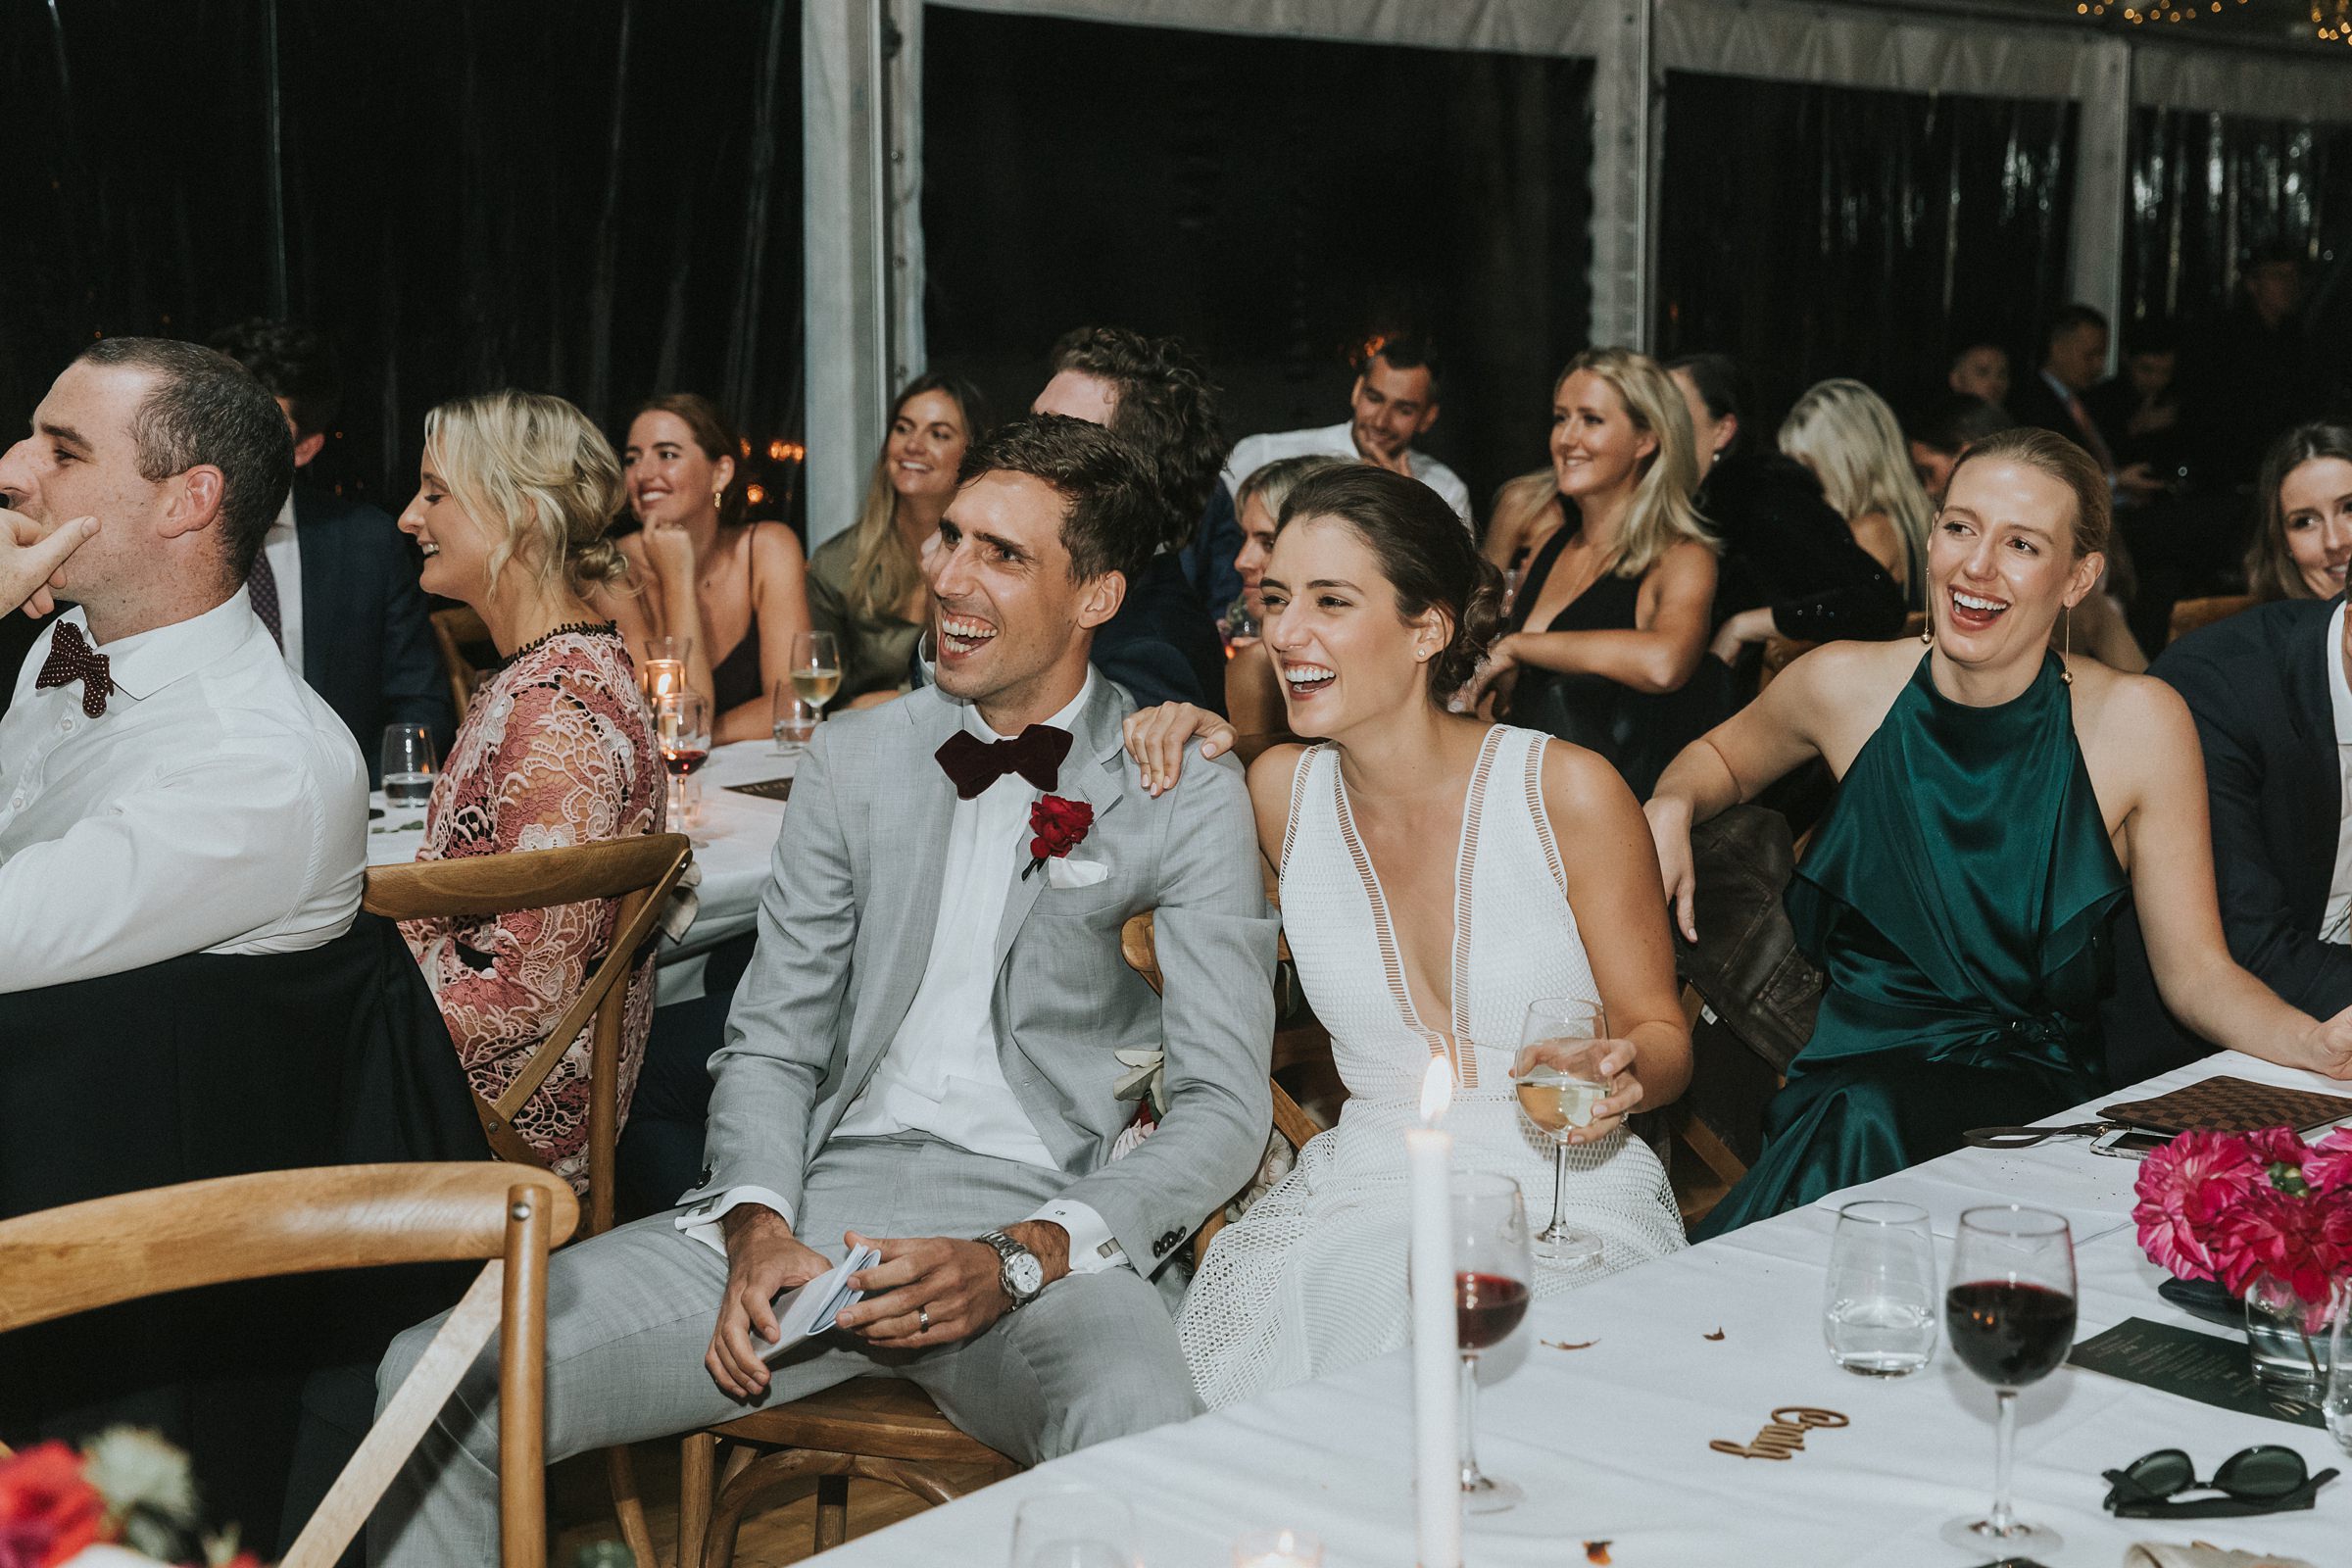 candid and honest wedding photos during wedding reception